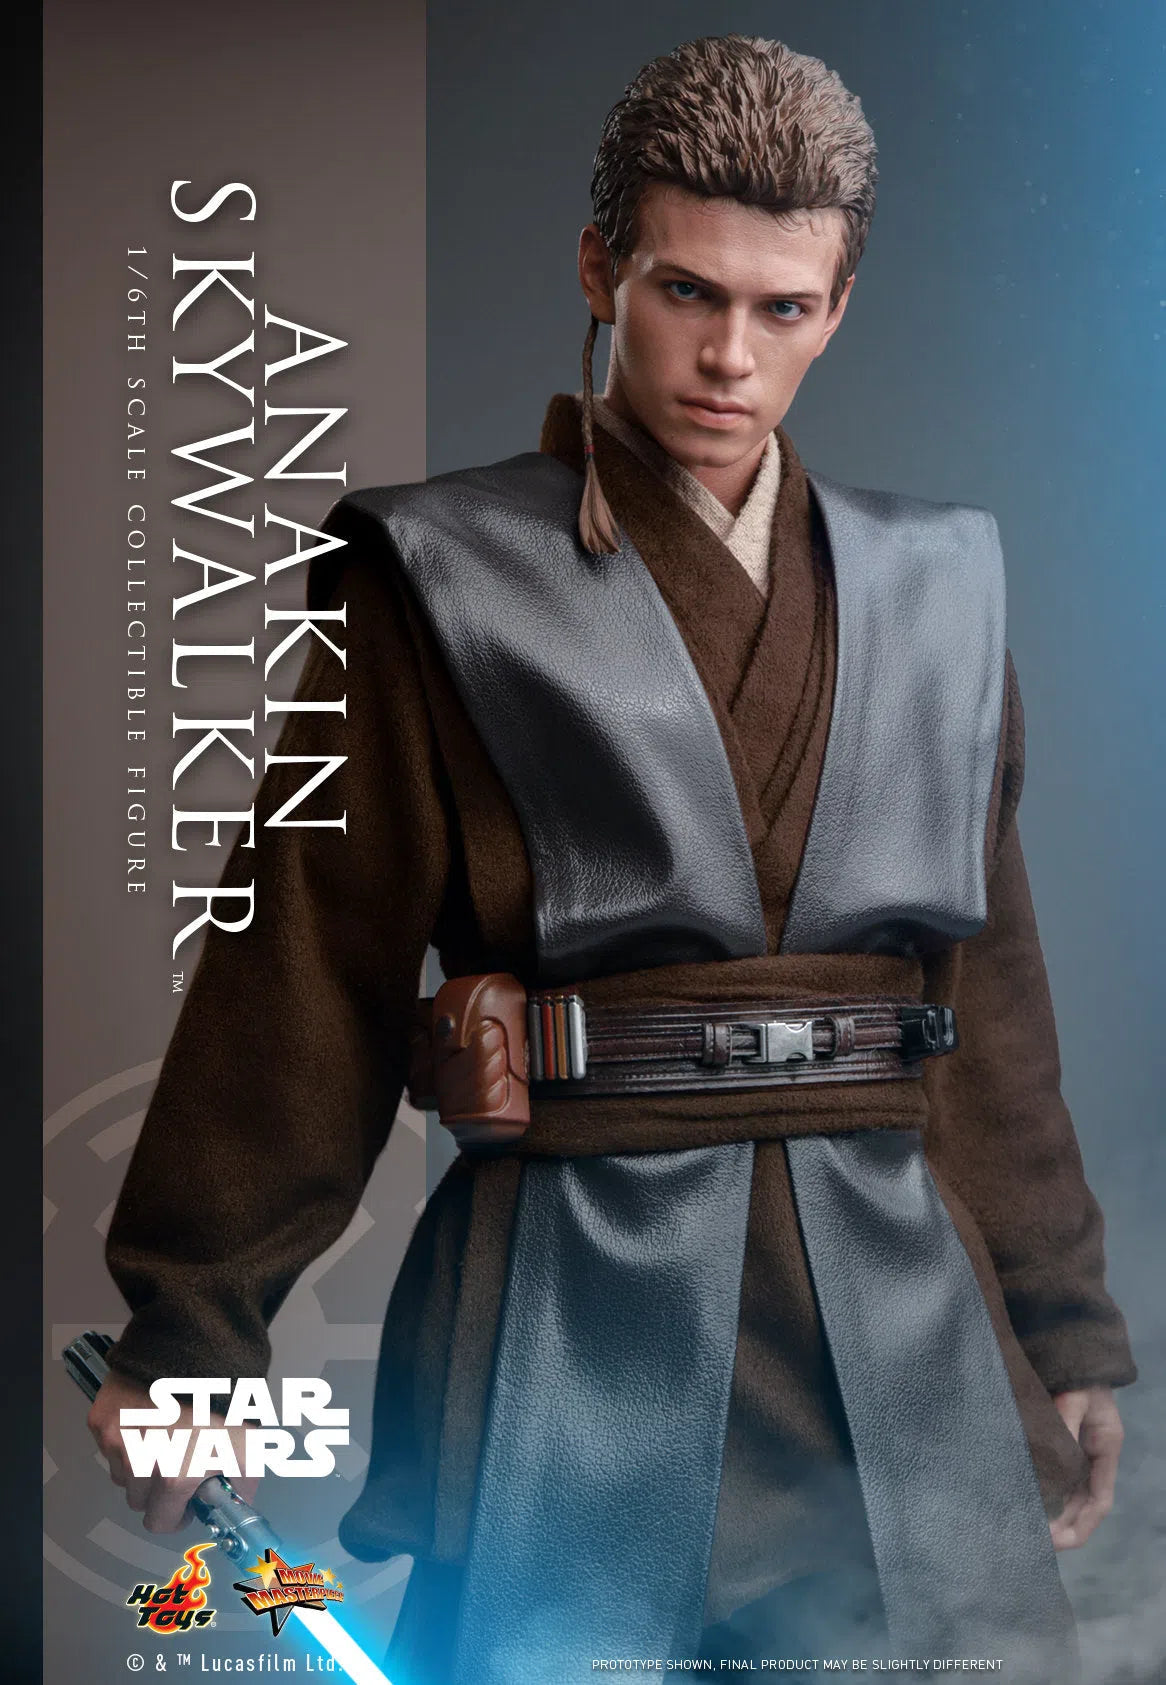 Anakin Skywalker: Star Wars Episode II: Attack Of The Clones Hot Toys